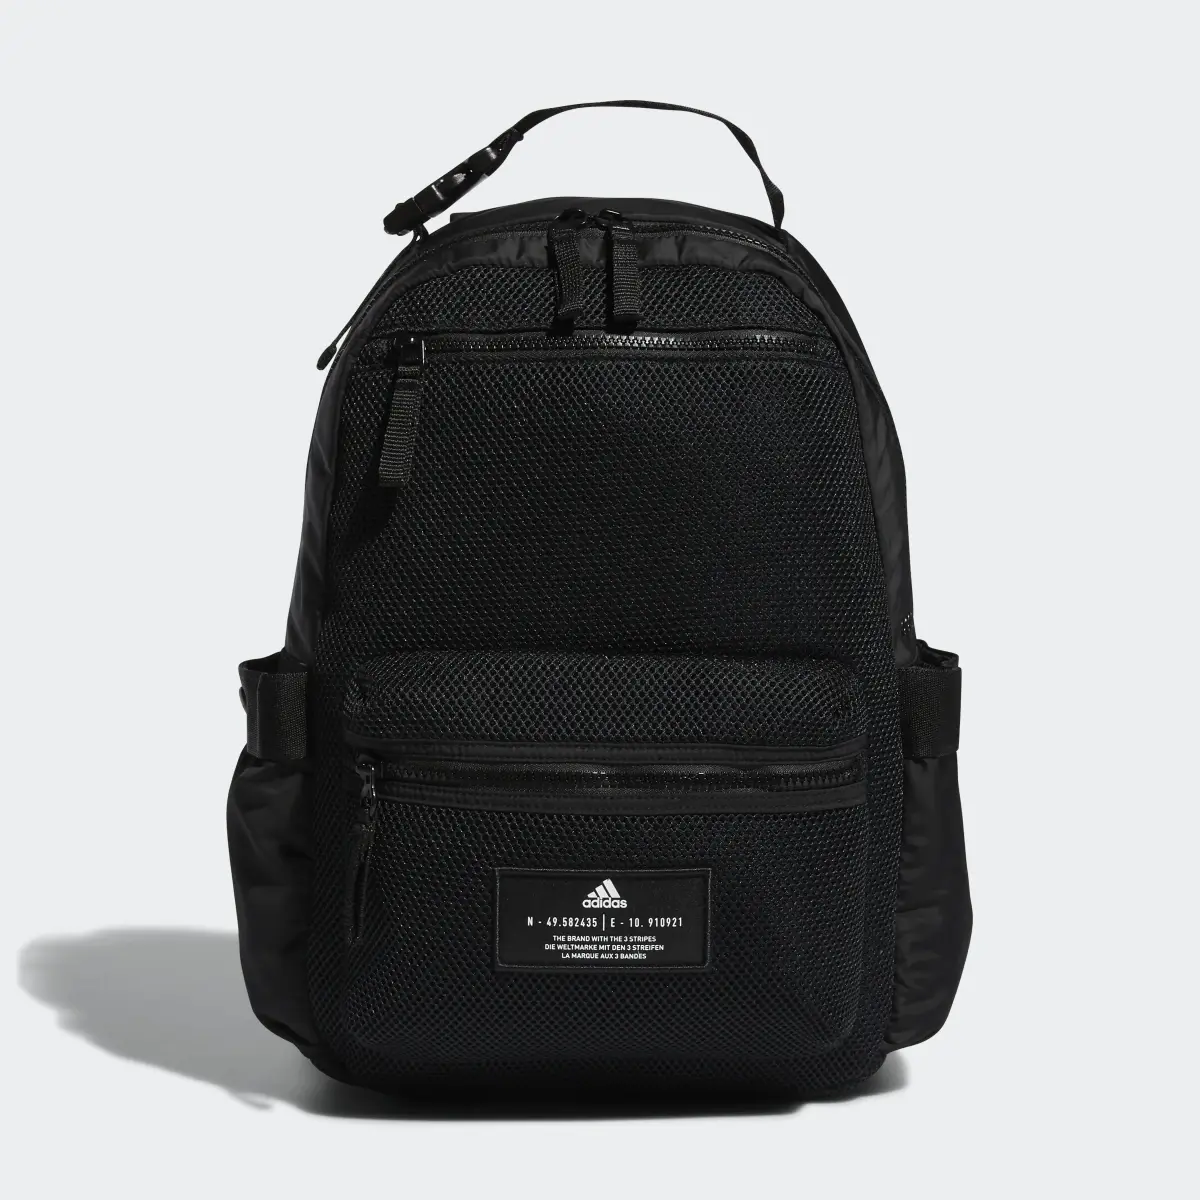 Adidas VFA Backpack. 2